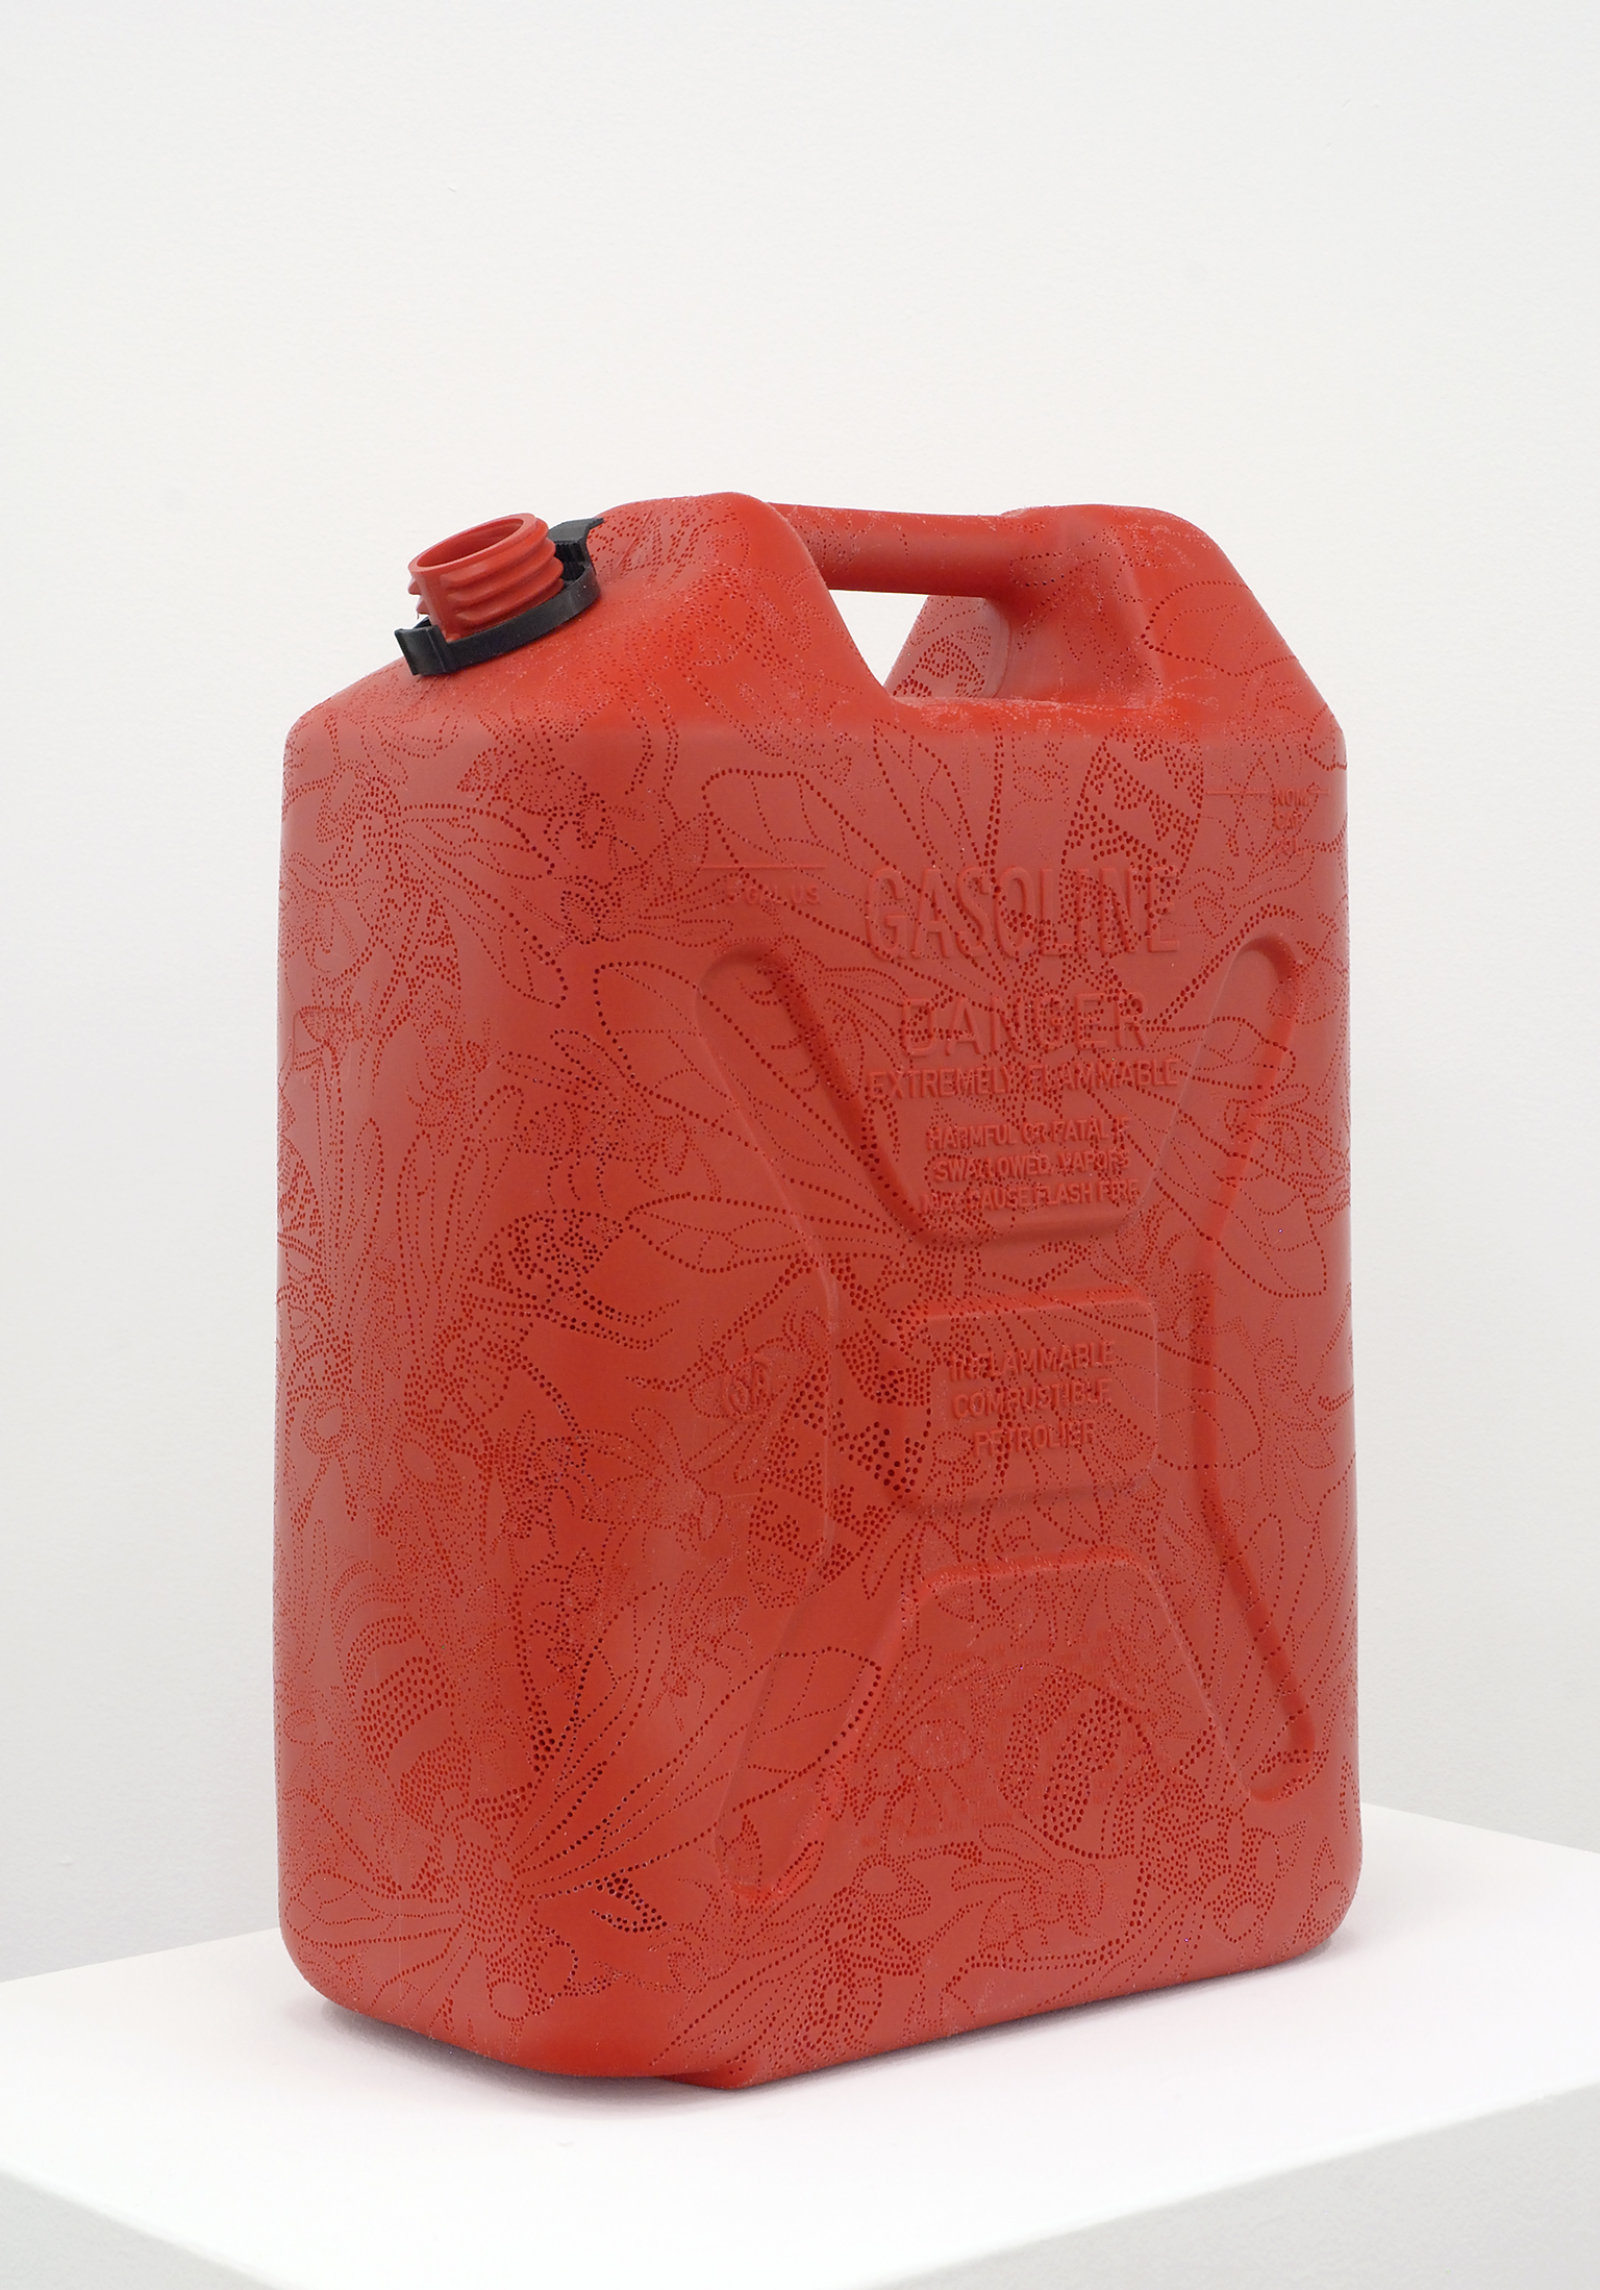 Brian Jungen, Wasp, 2008, carved gallon gasoline jug, 18 x 13 x 7 in. (46 x 33 x 18 cm)